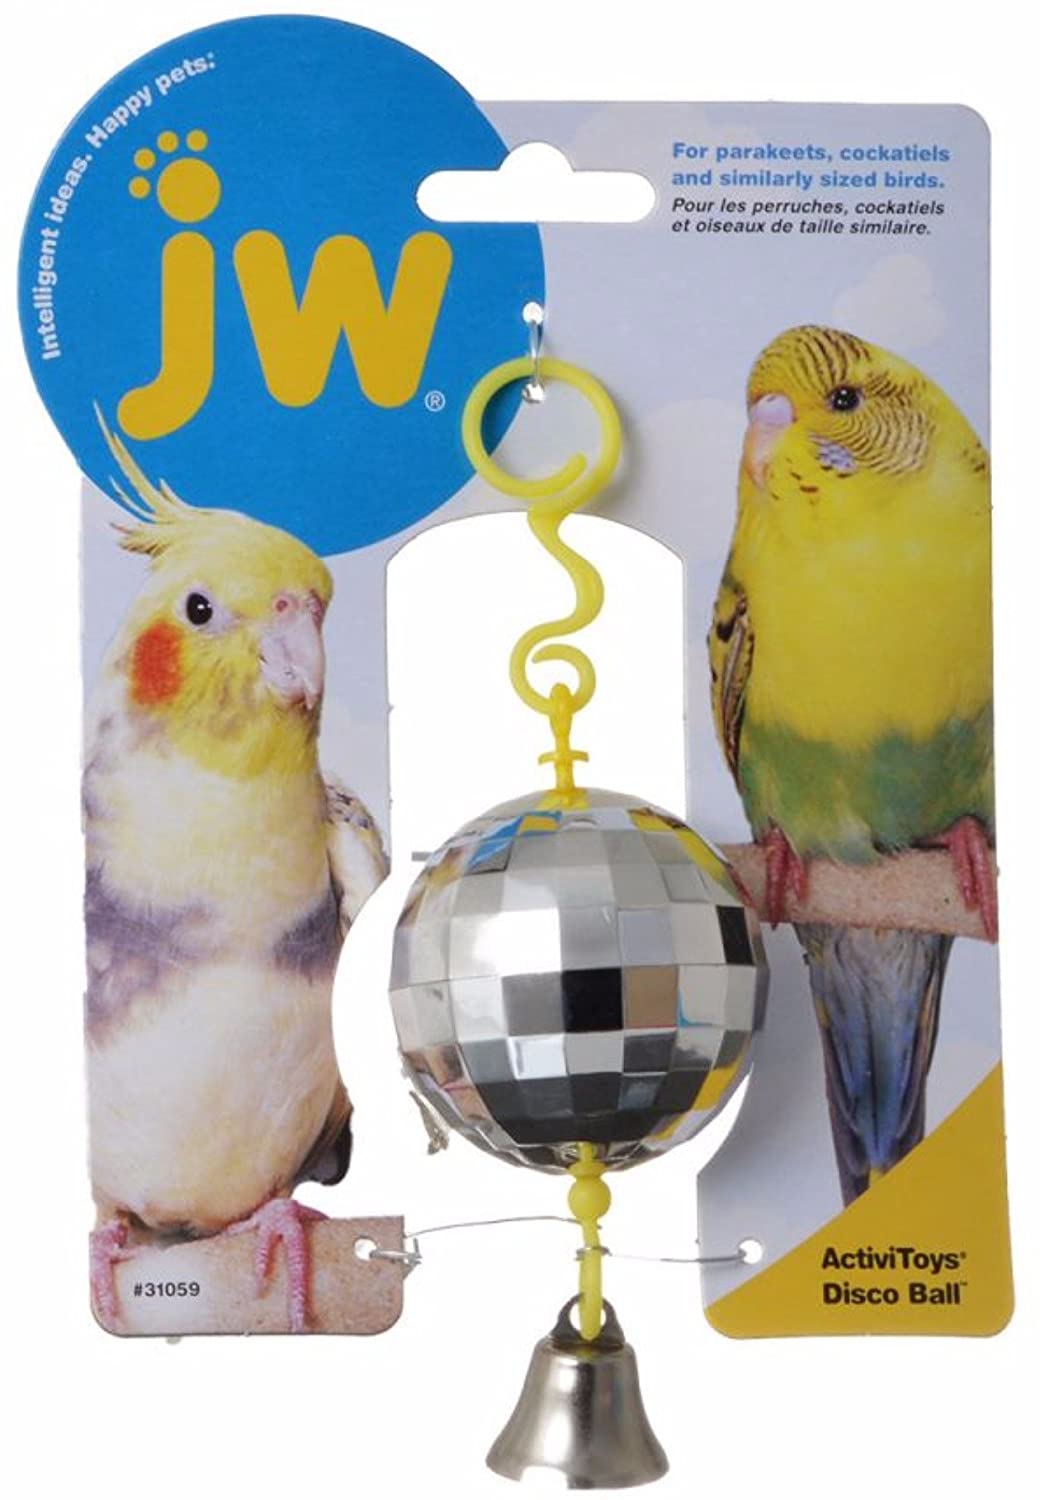 JW Activitoy Disco Ball